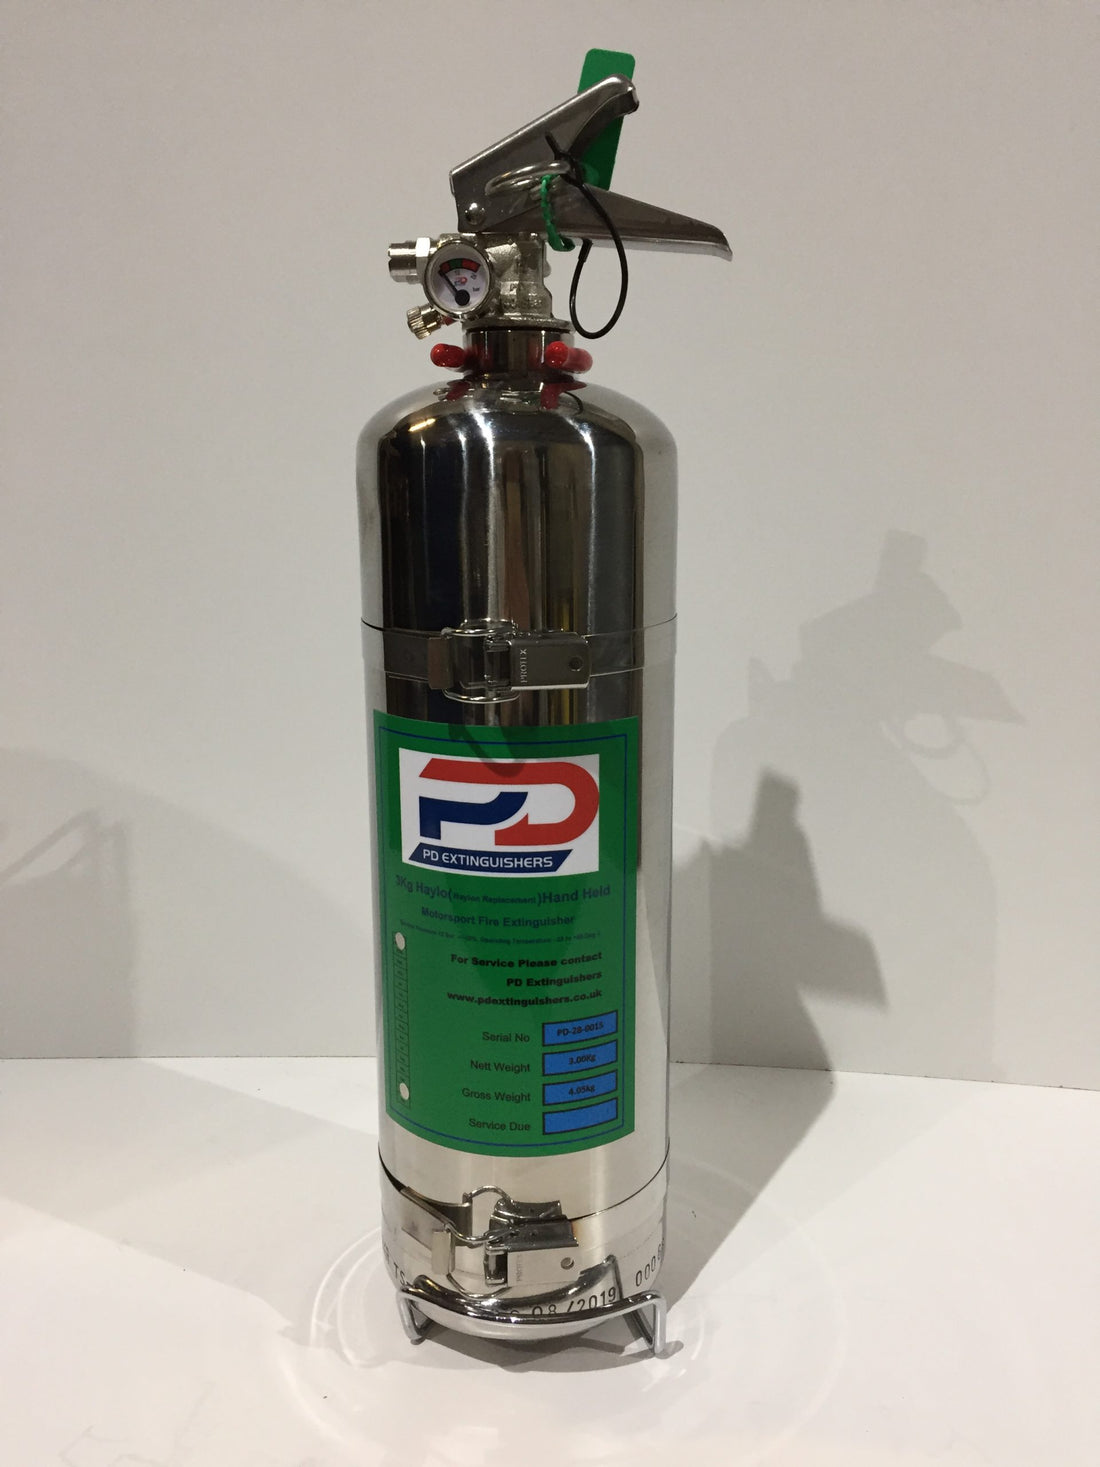 PD Extinguishers 2Kg Haylo Hand Held Fire Extinguisher